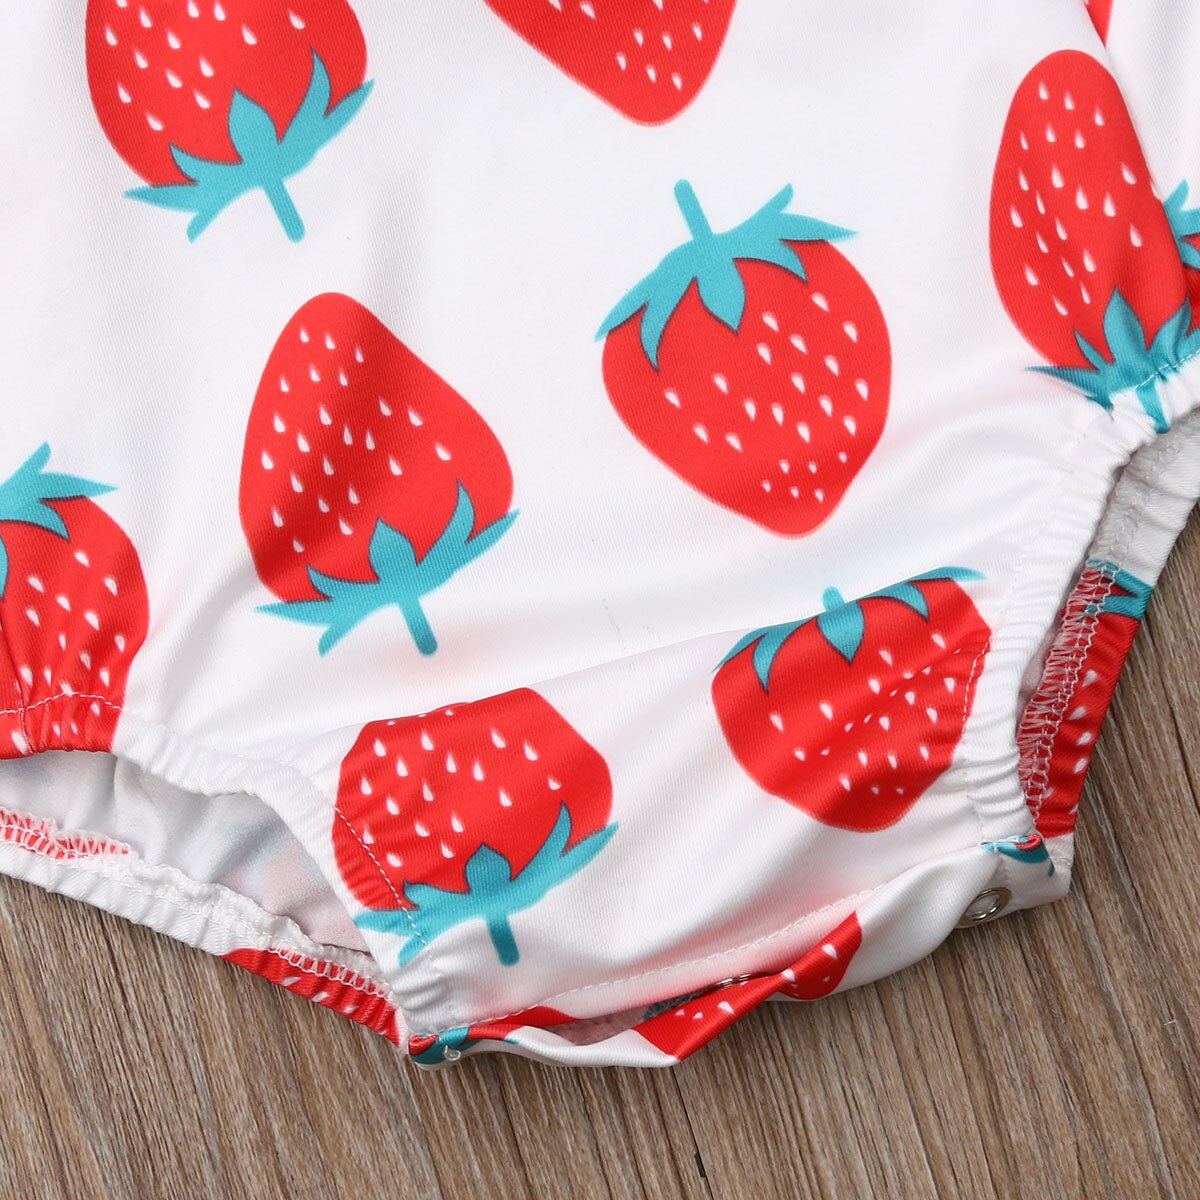 0-24m søde babypiger drenge bodysuits flæse ærmeløs jordbær jumpsuit outfits sunsuit